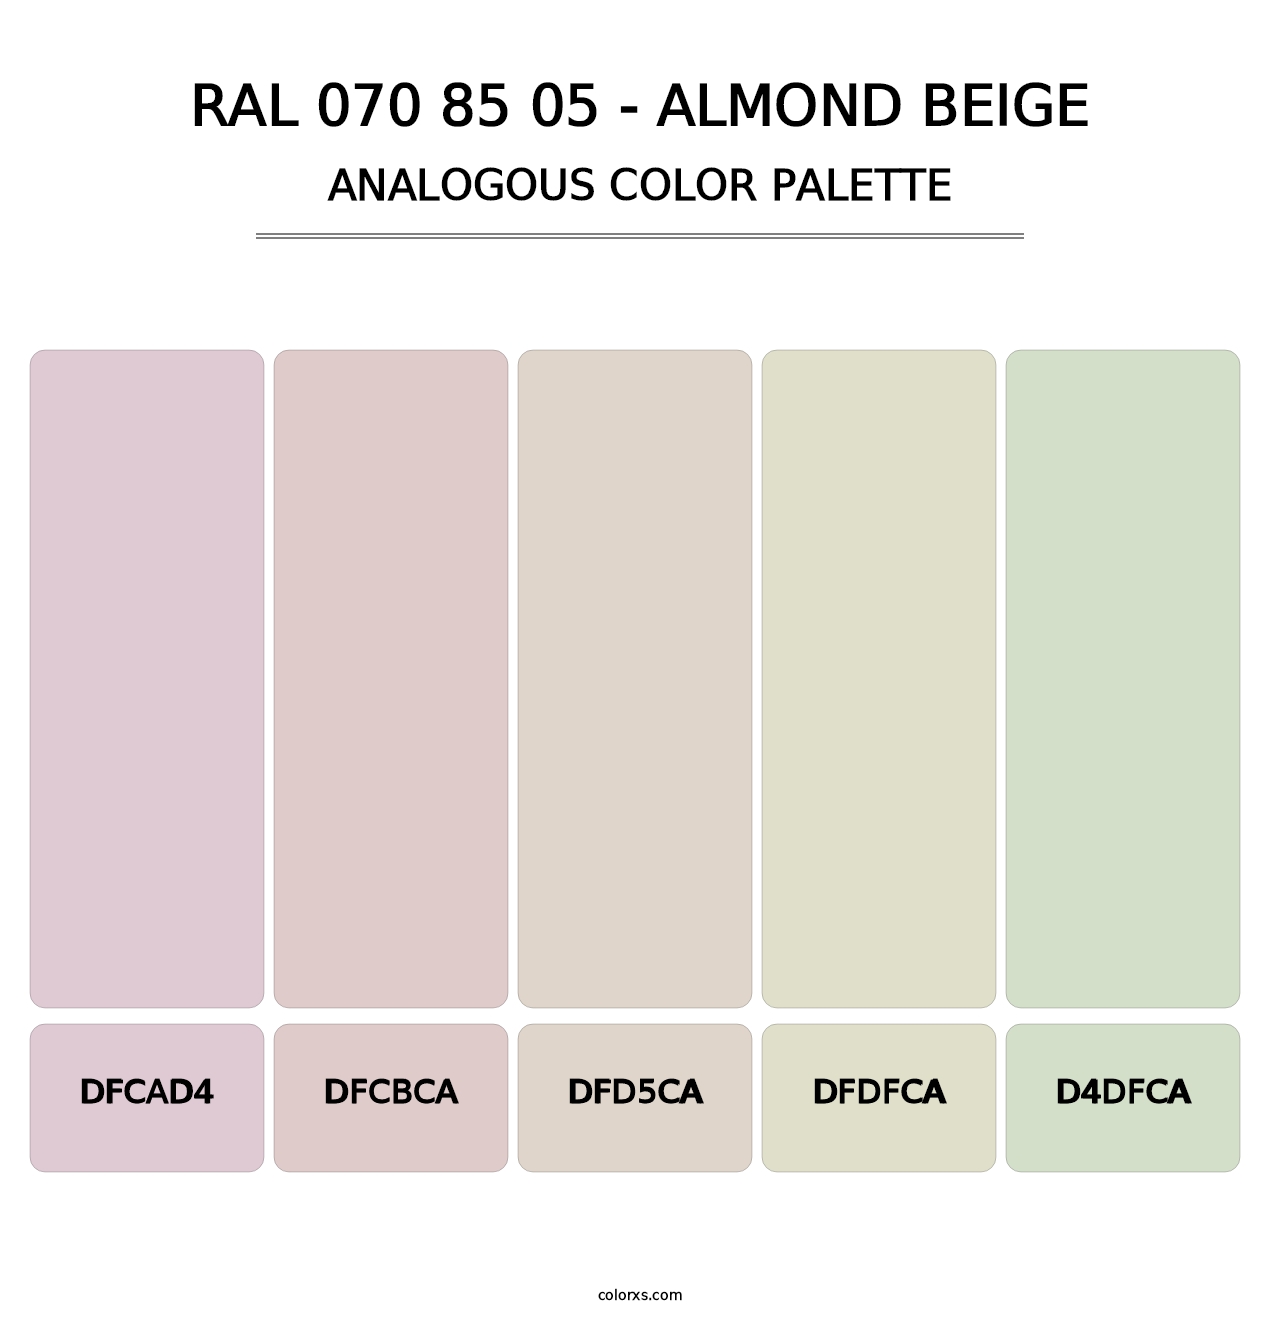 RAL 070 85 05 - Almond Beige - Analogous Color Palette